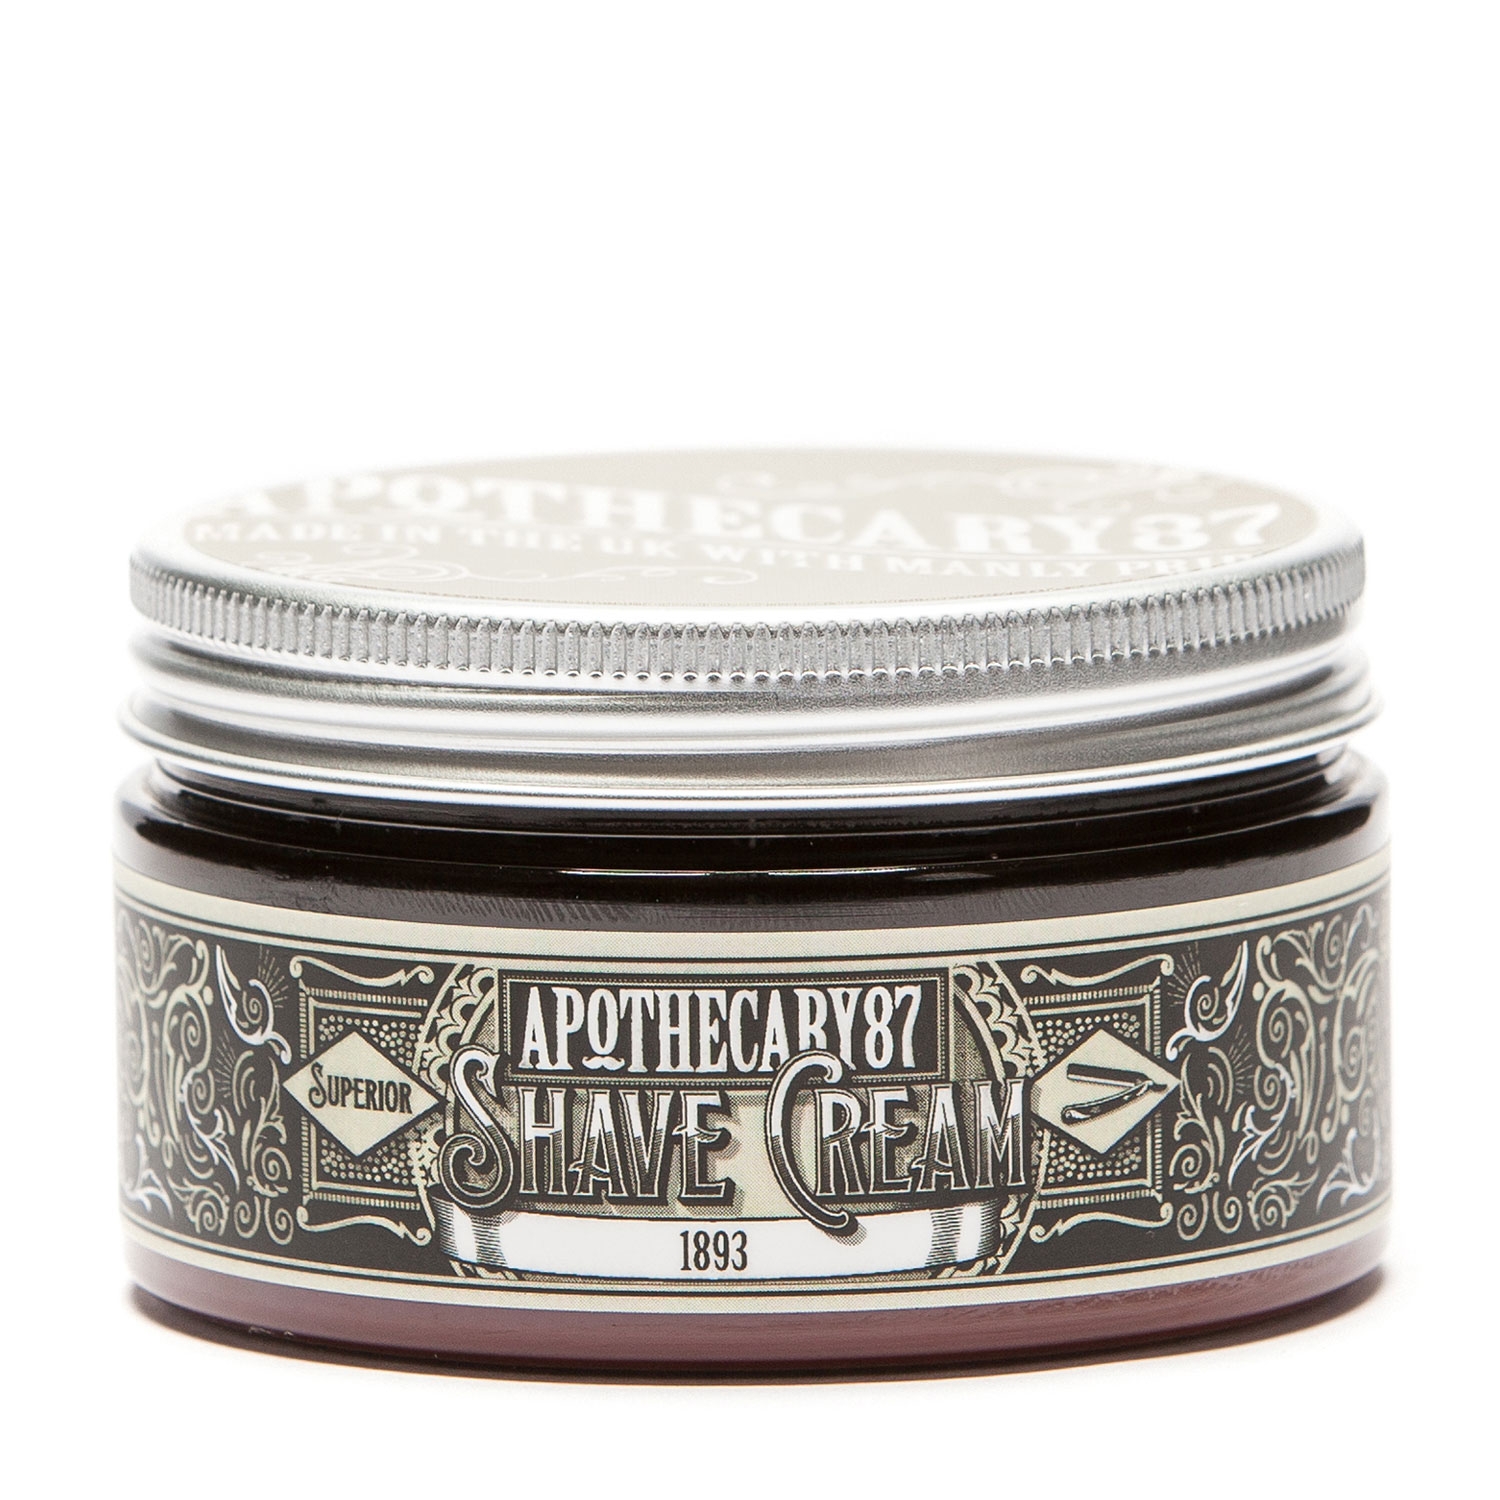 Produktbild von Apothecary87 Grooming - Shave Cream 1893 Fragrance